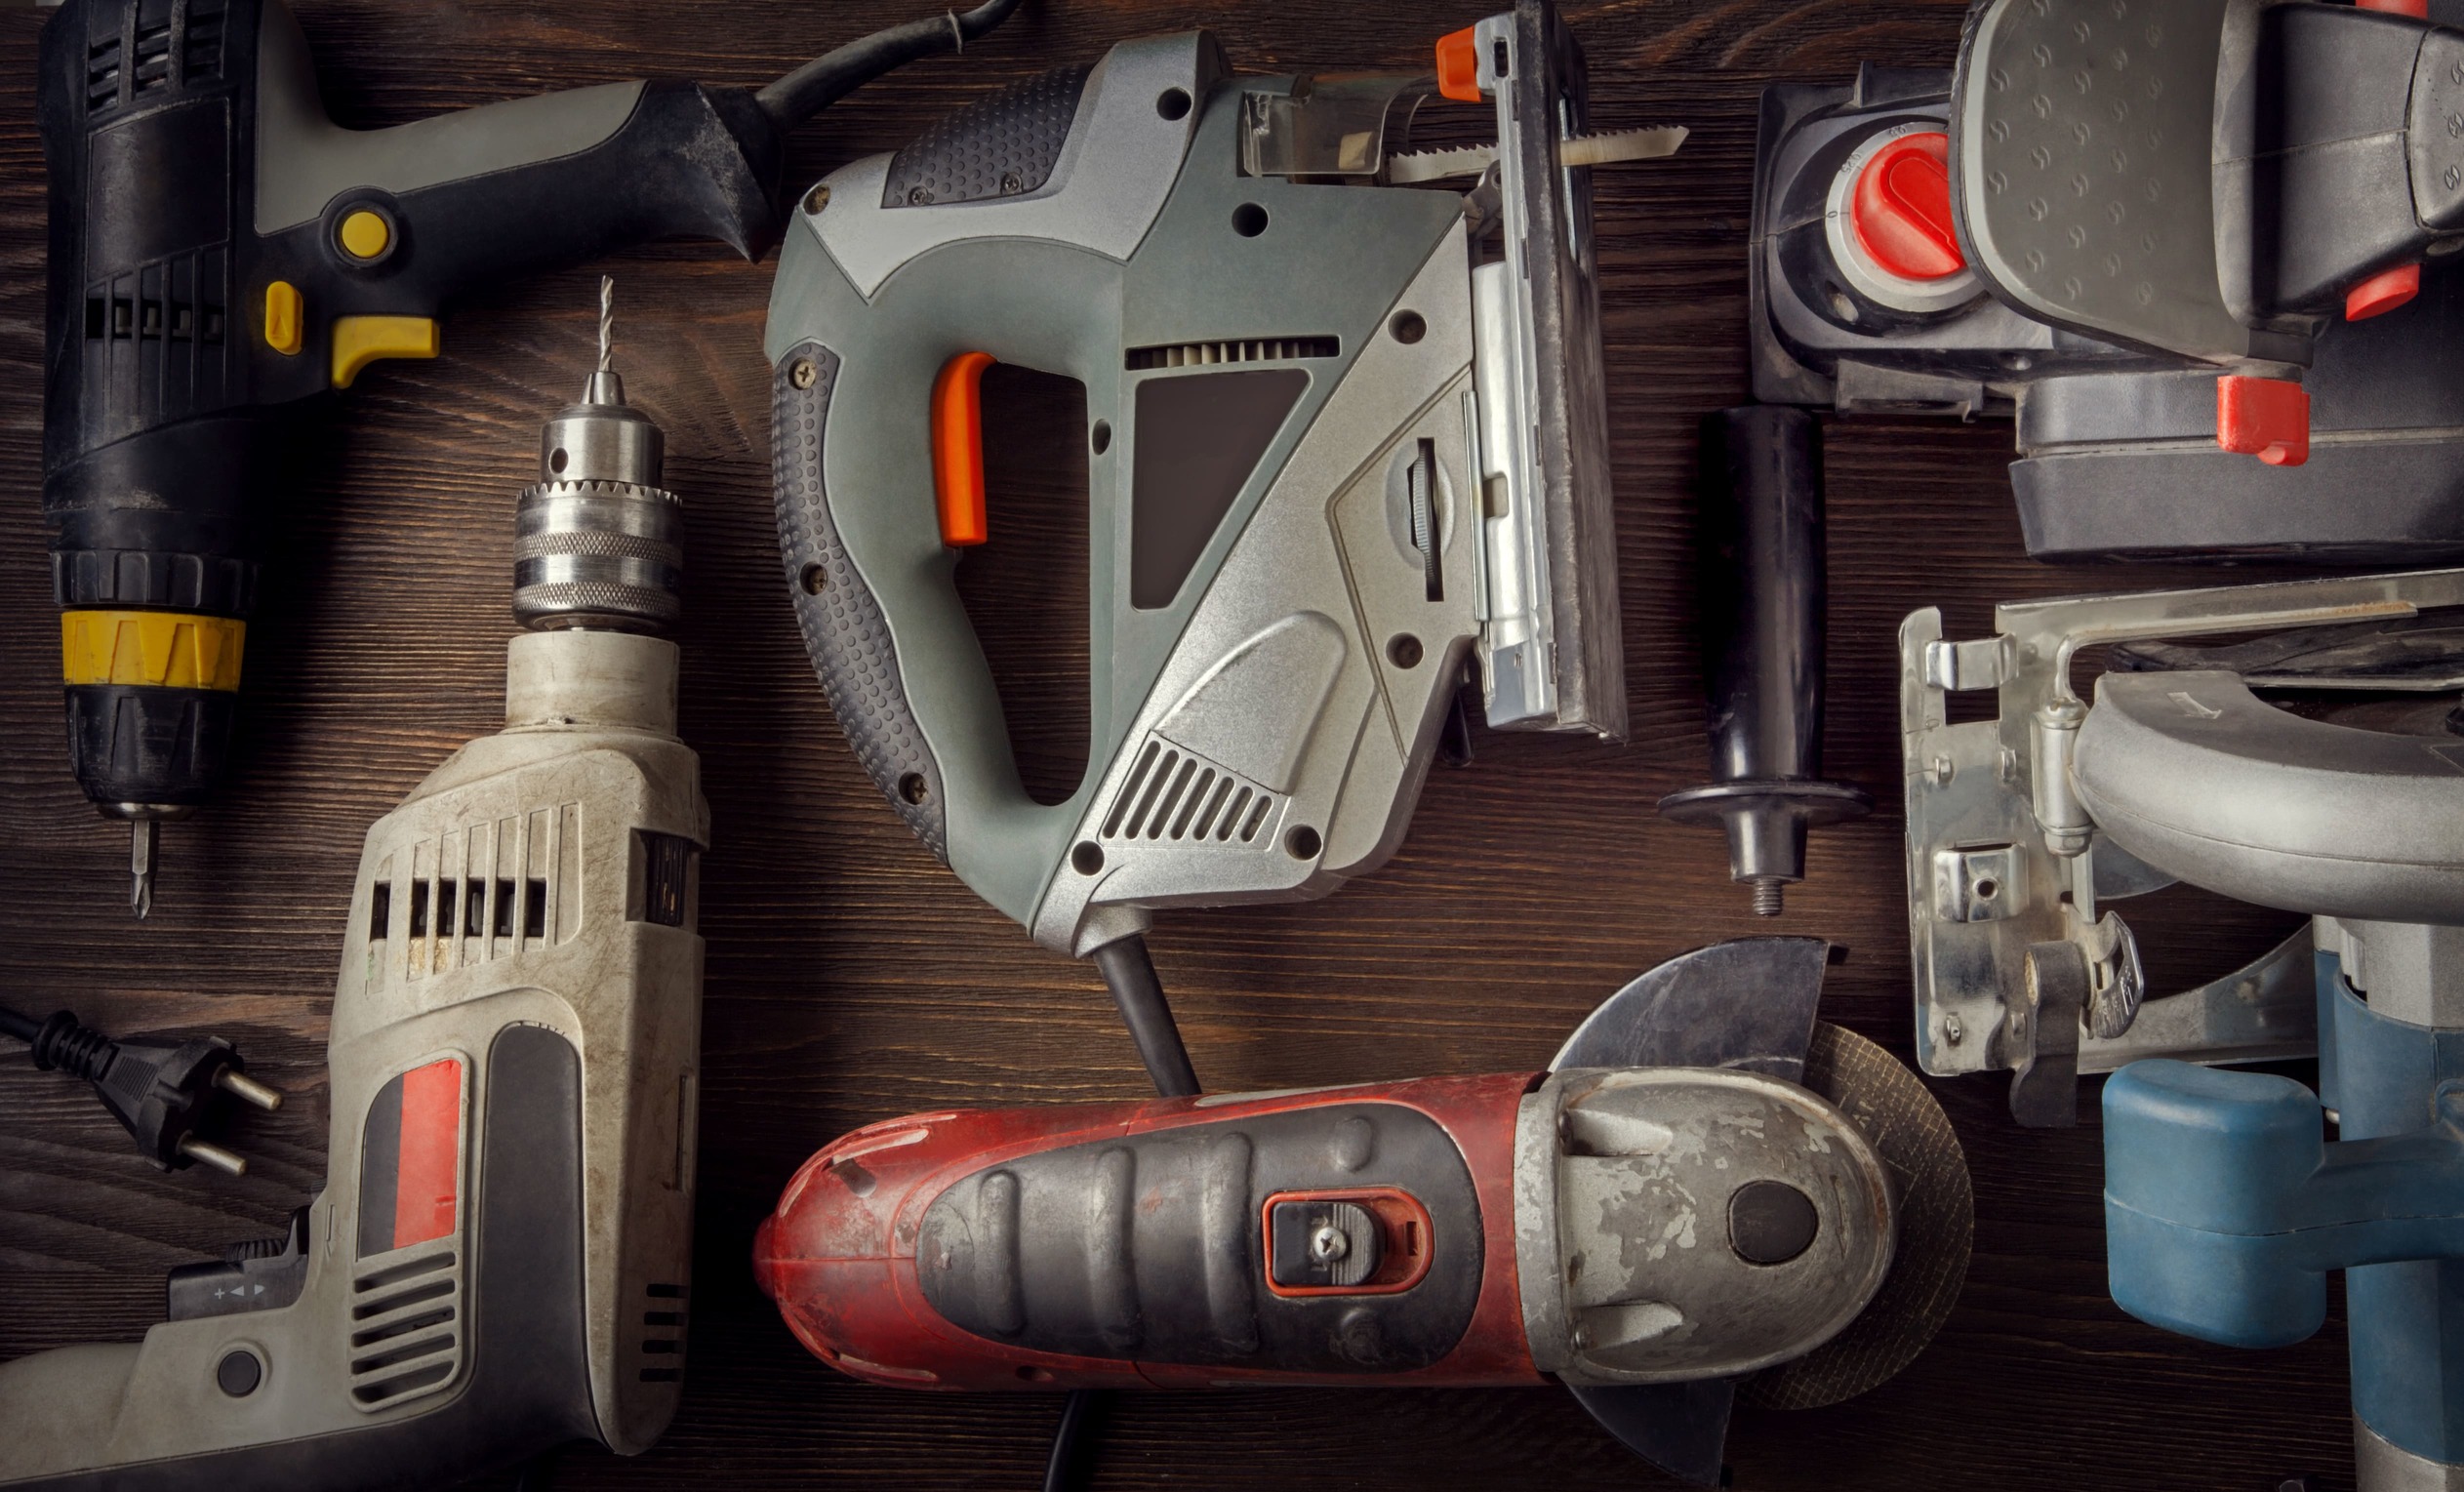 Tools & Equipment Rental Leads #12 - damianmartinez.com